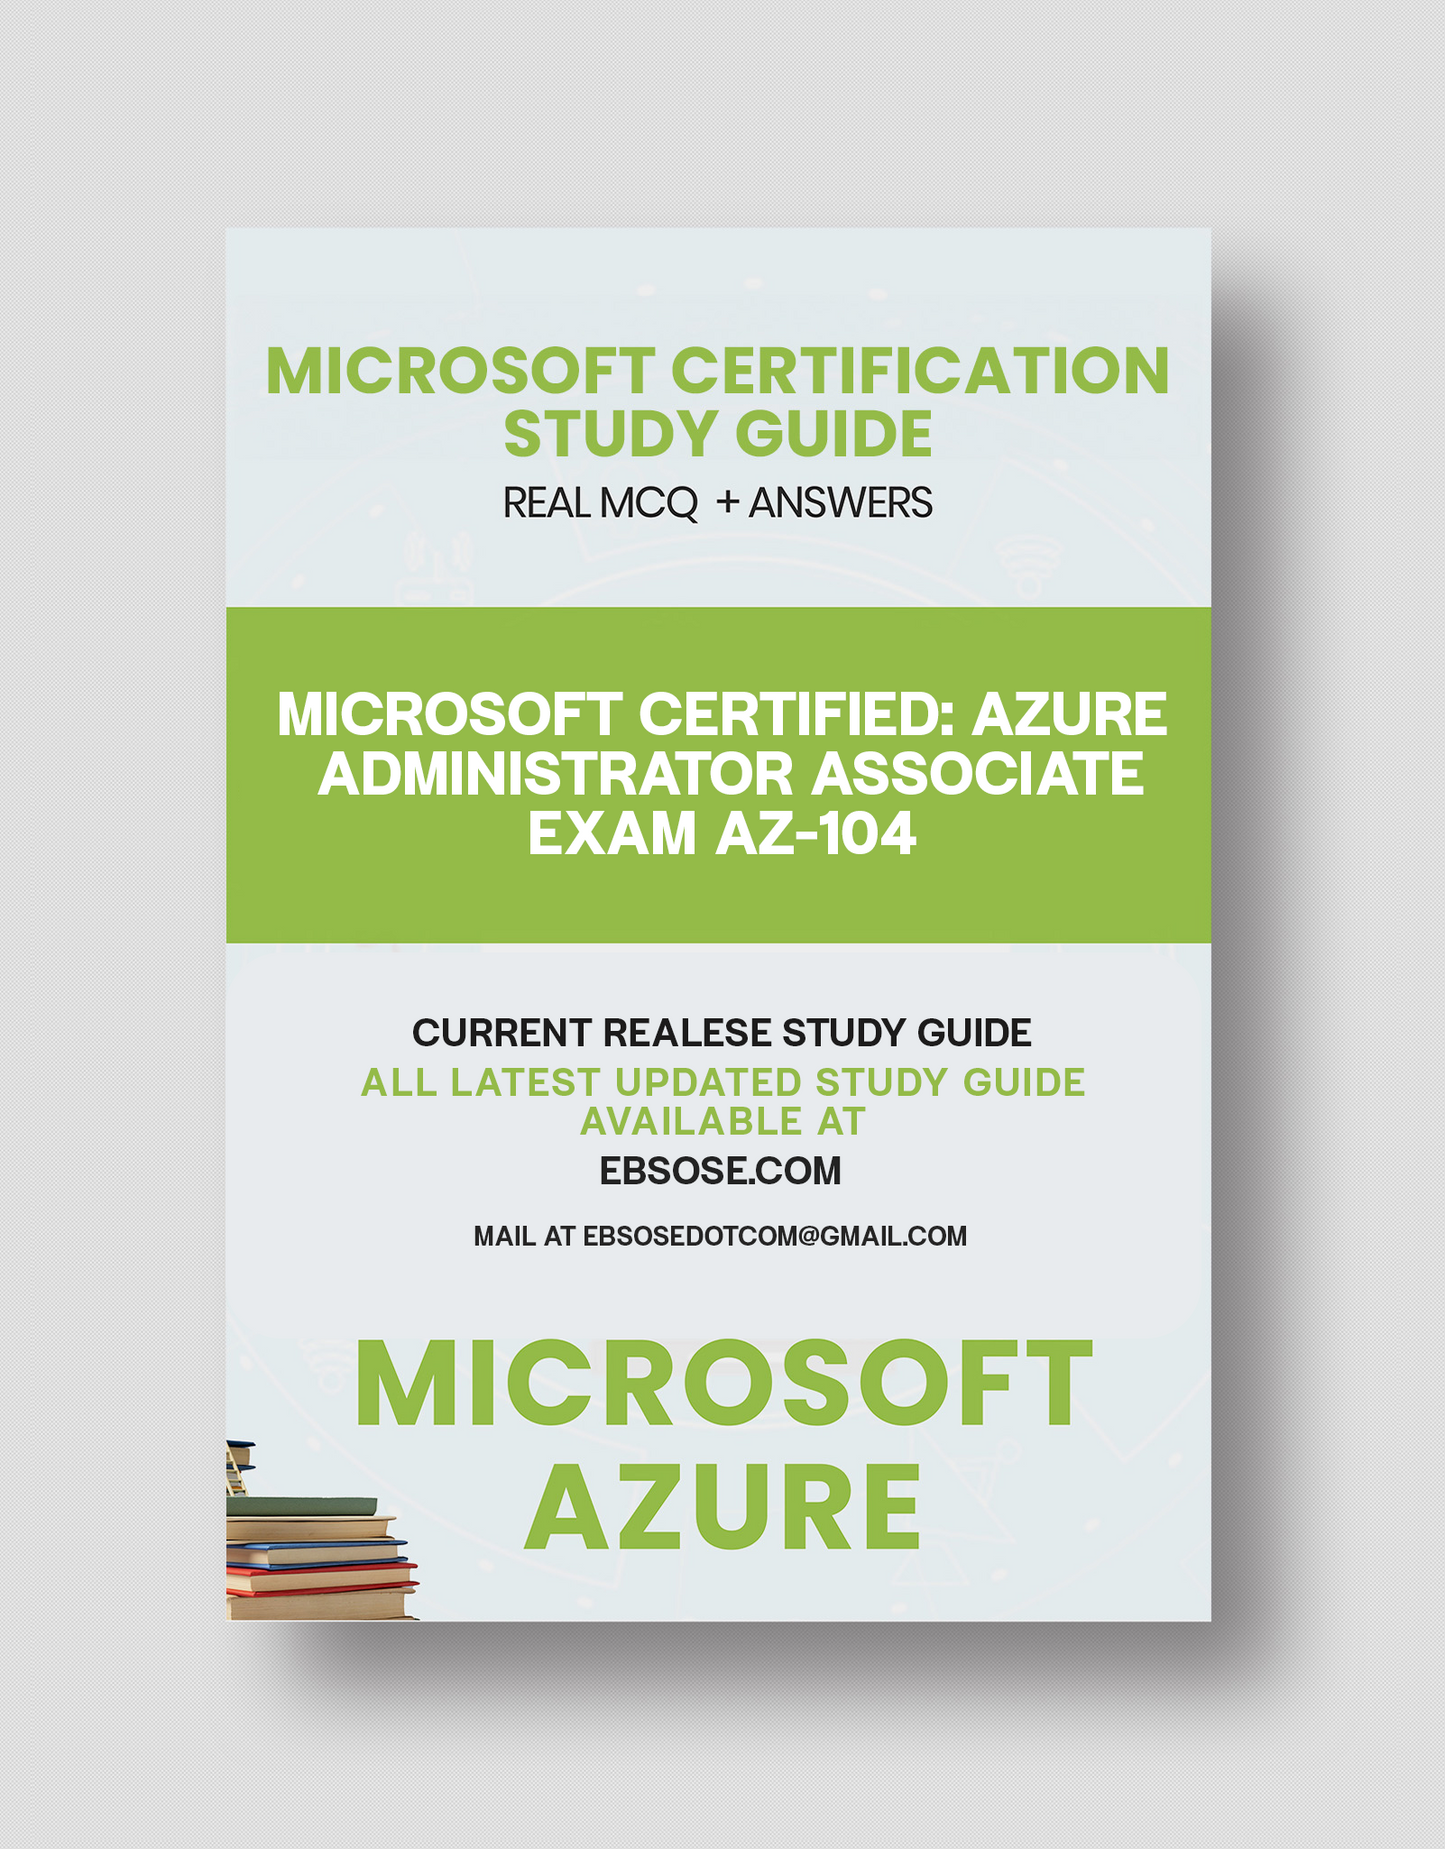 Microsoft Certified: Azure Administrator Associate – Exam AZ-104